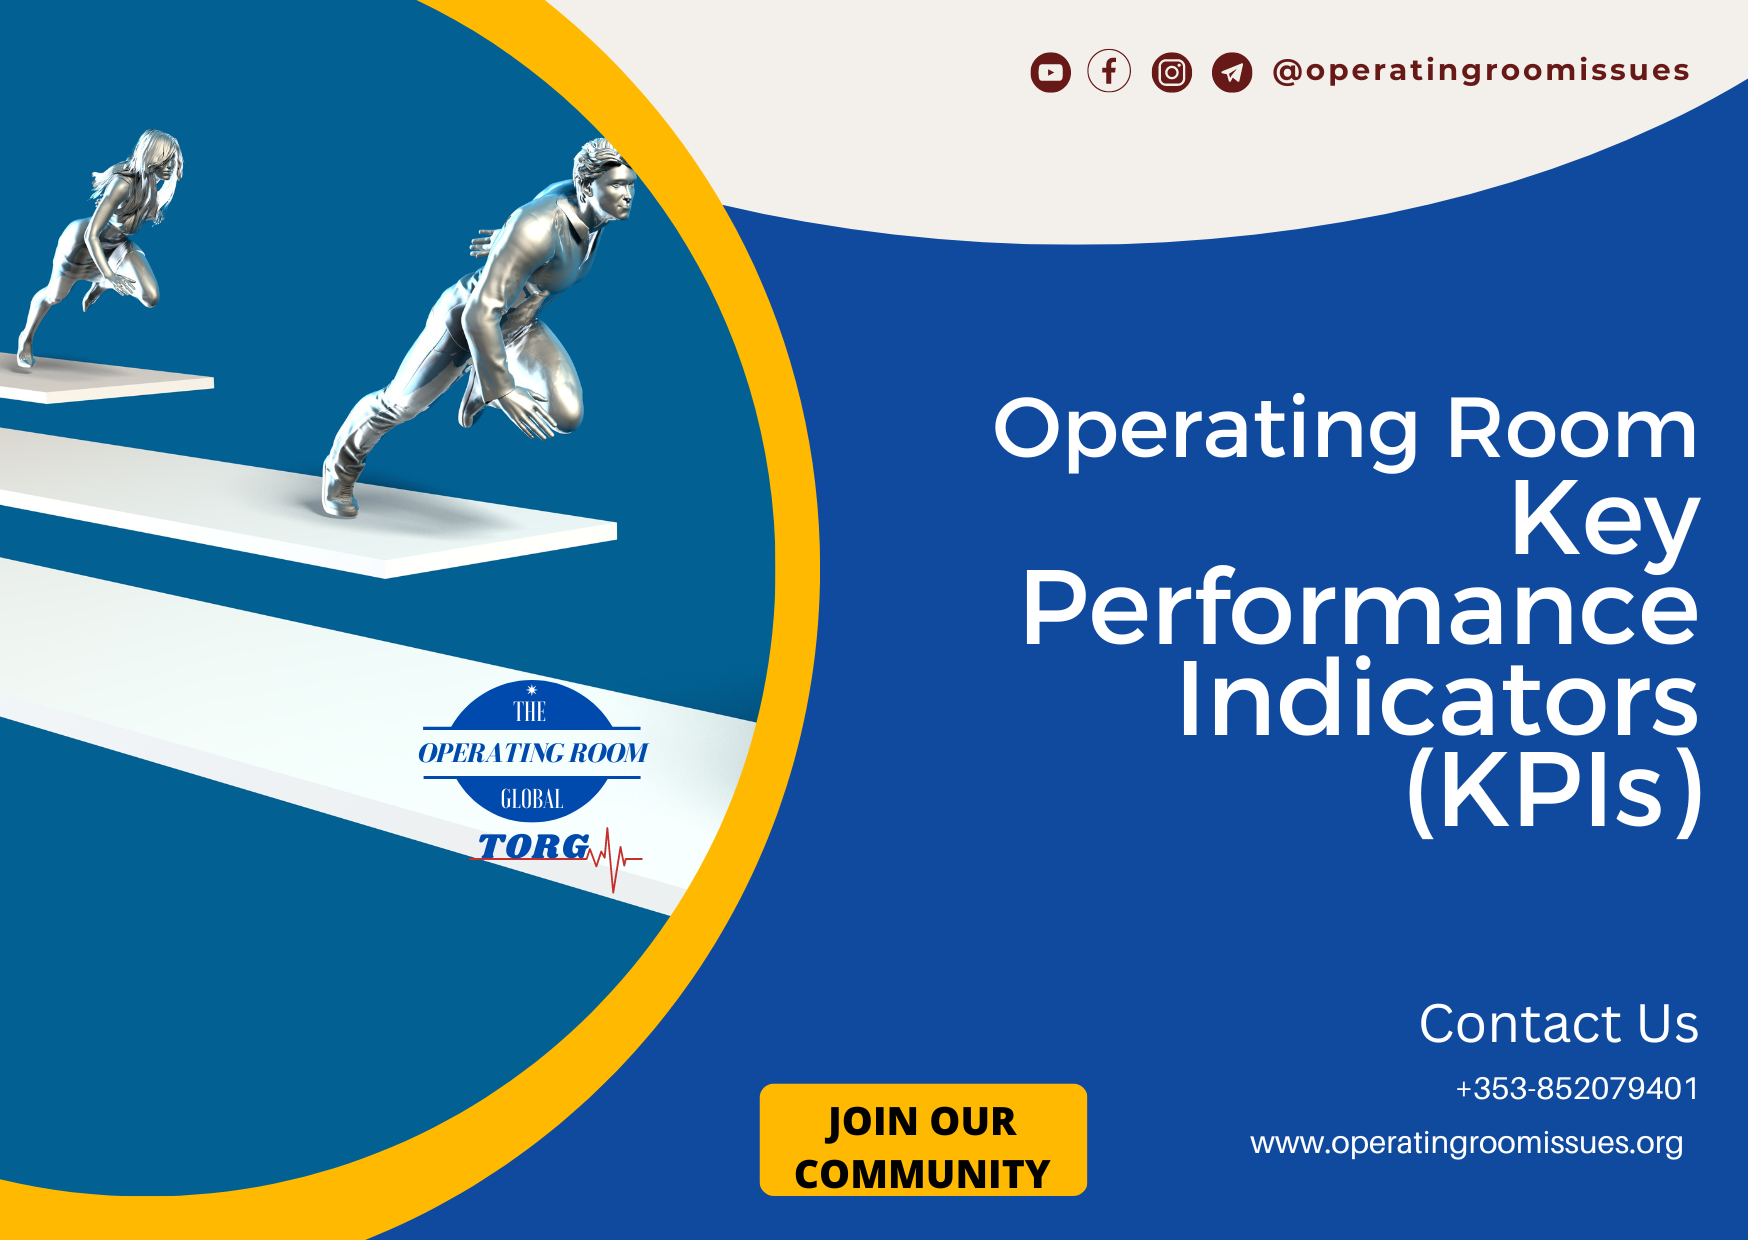 Key Performance Indicators (KPIs) of the Operating Room